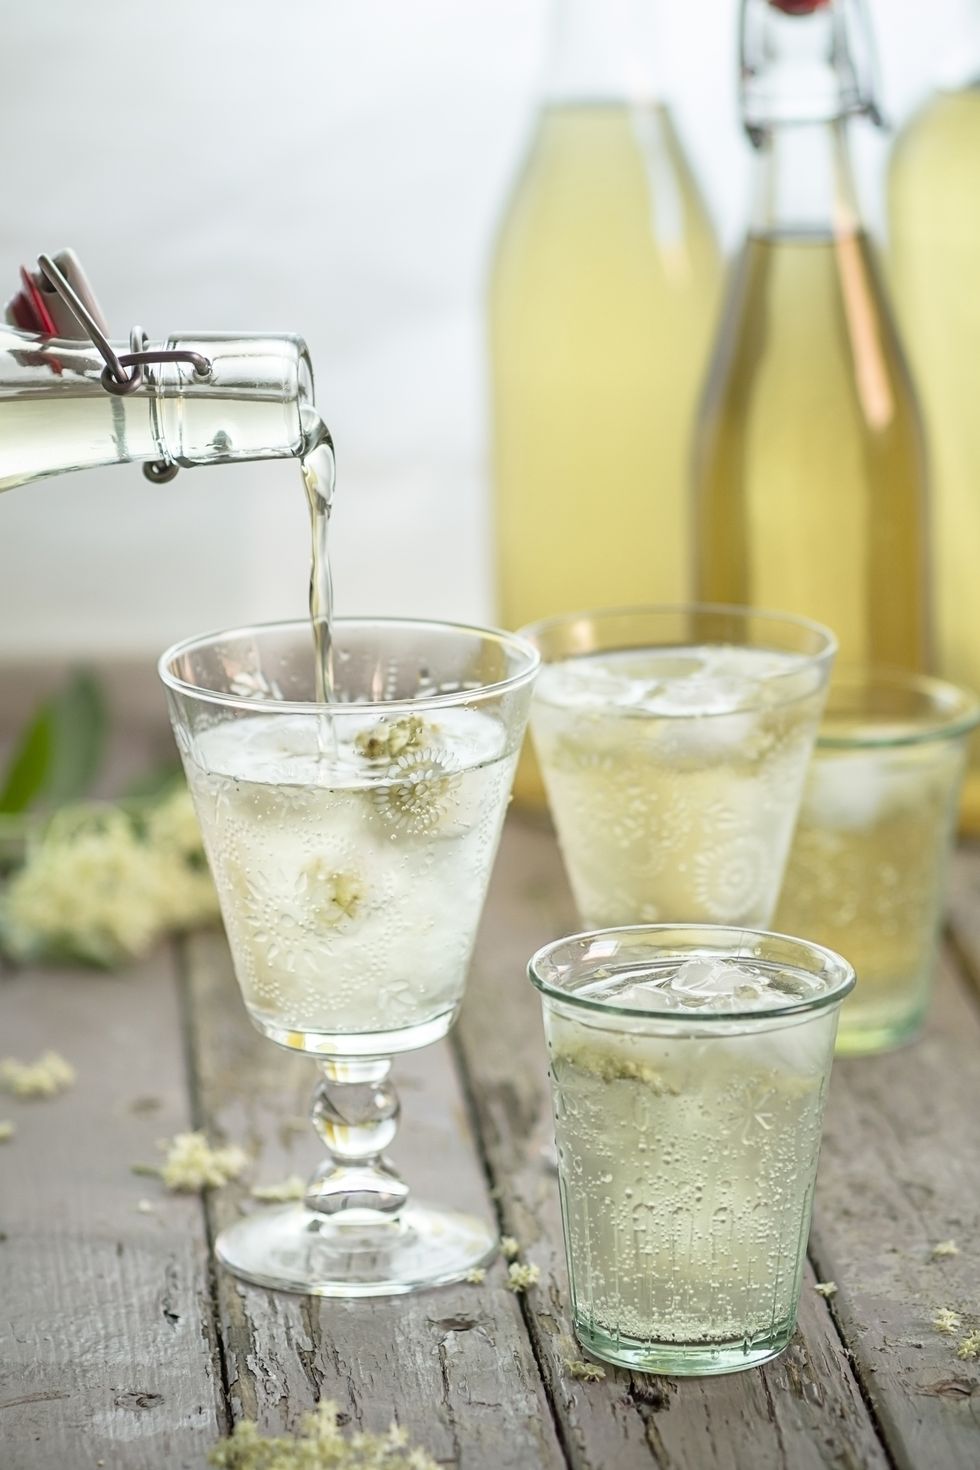 Pouring elderflower cordial into drinking glas